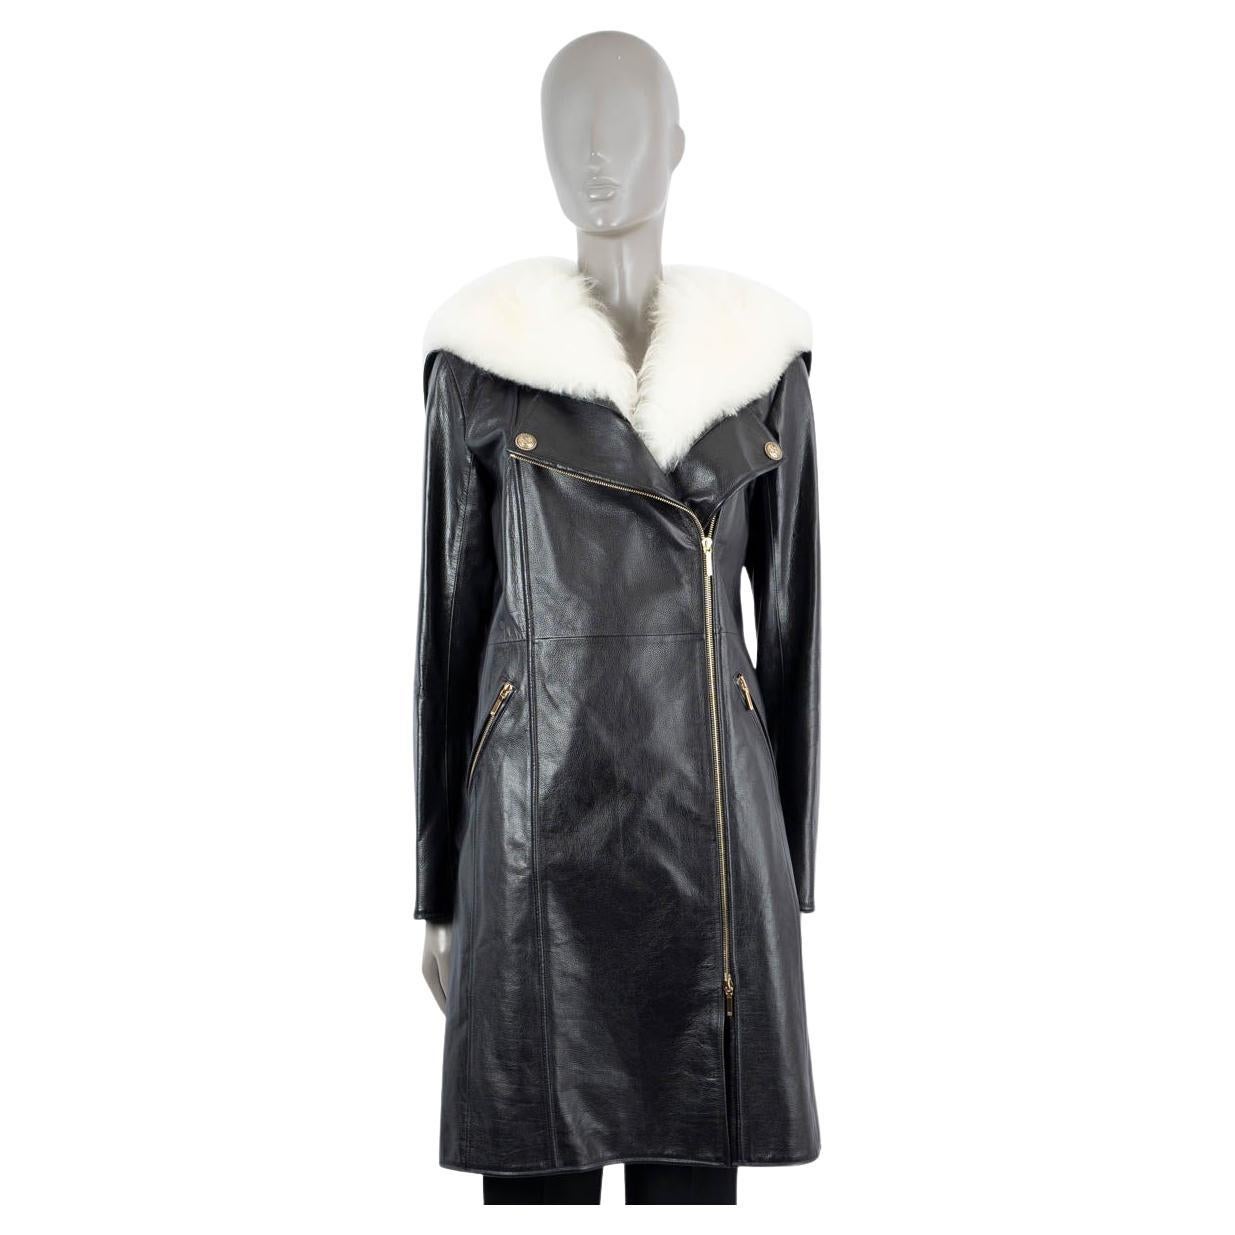 S/S 2009 Tweed Embellished Trim Jacket, Authentic & Vintage